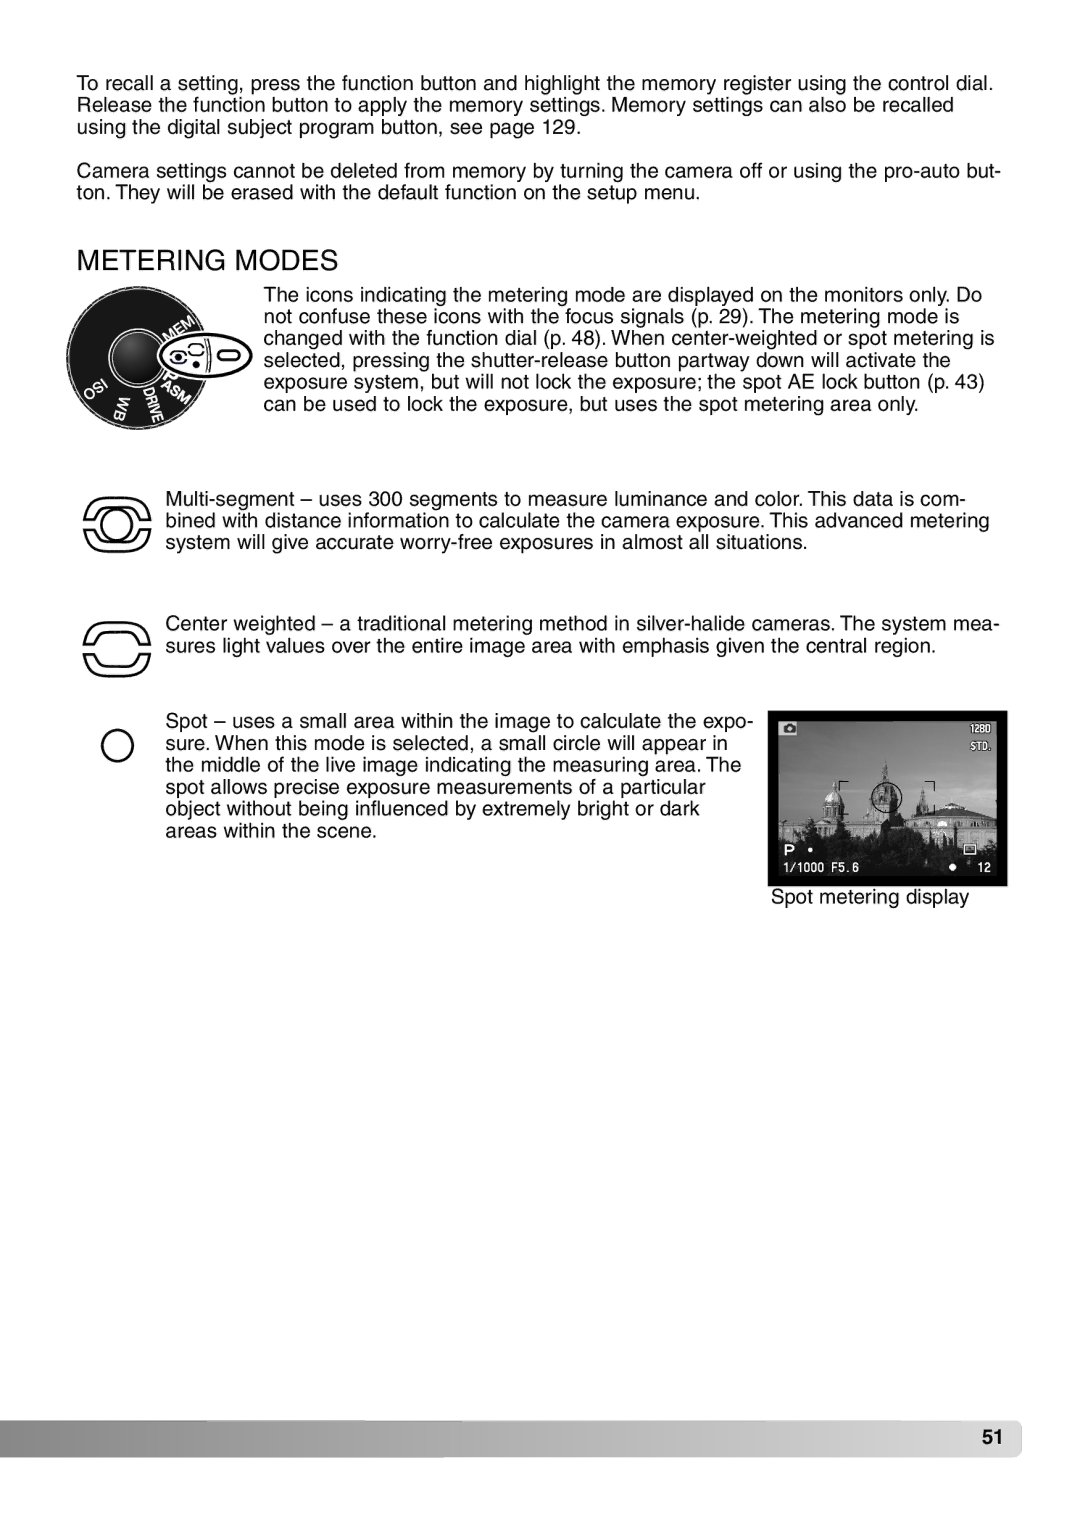 Konica Minolta 7Hi instruction manual Metering Modes 